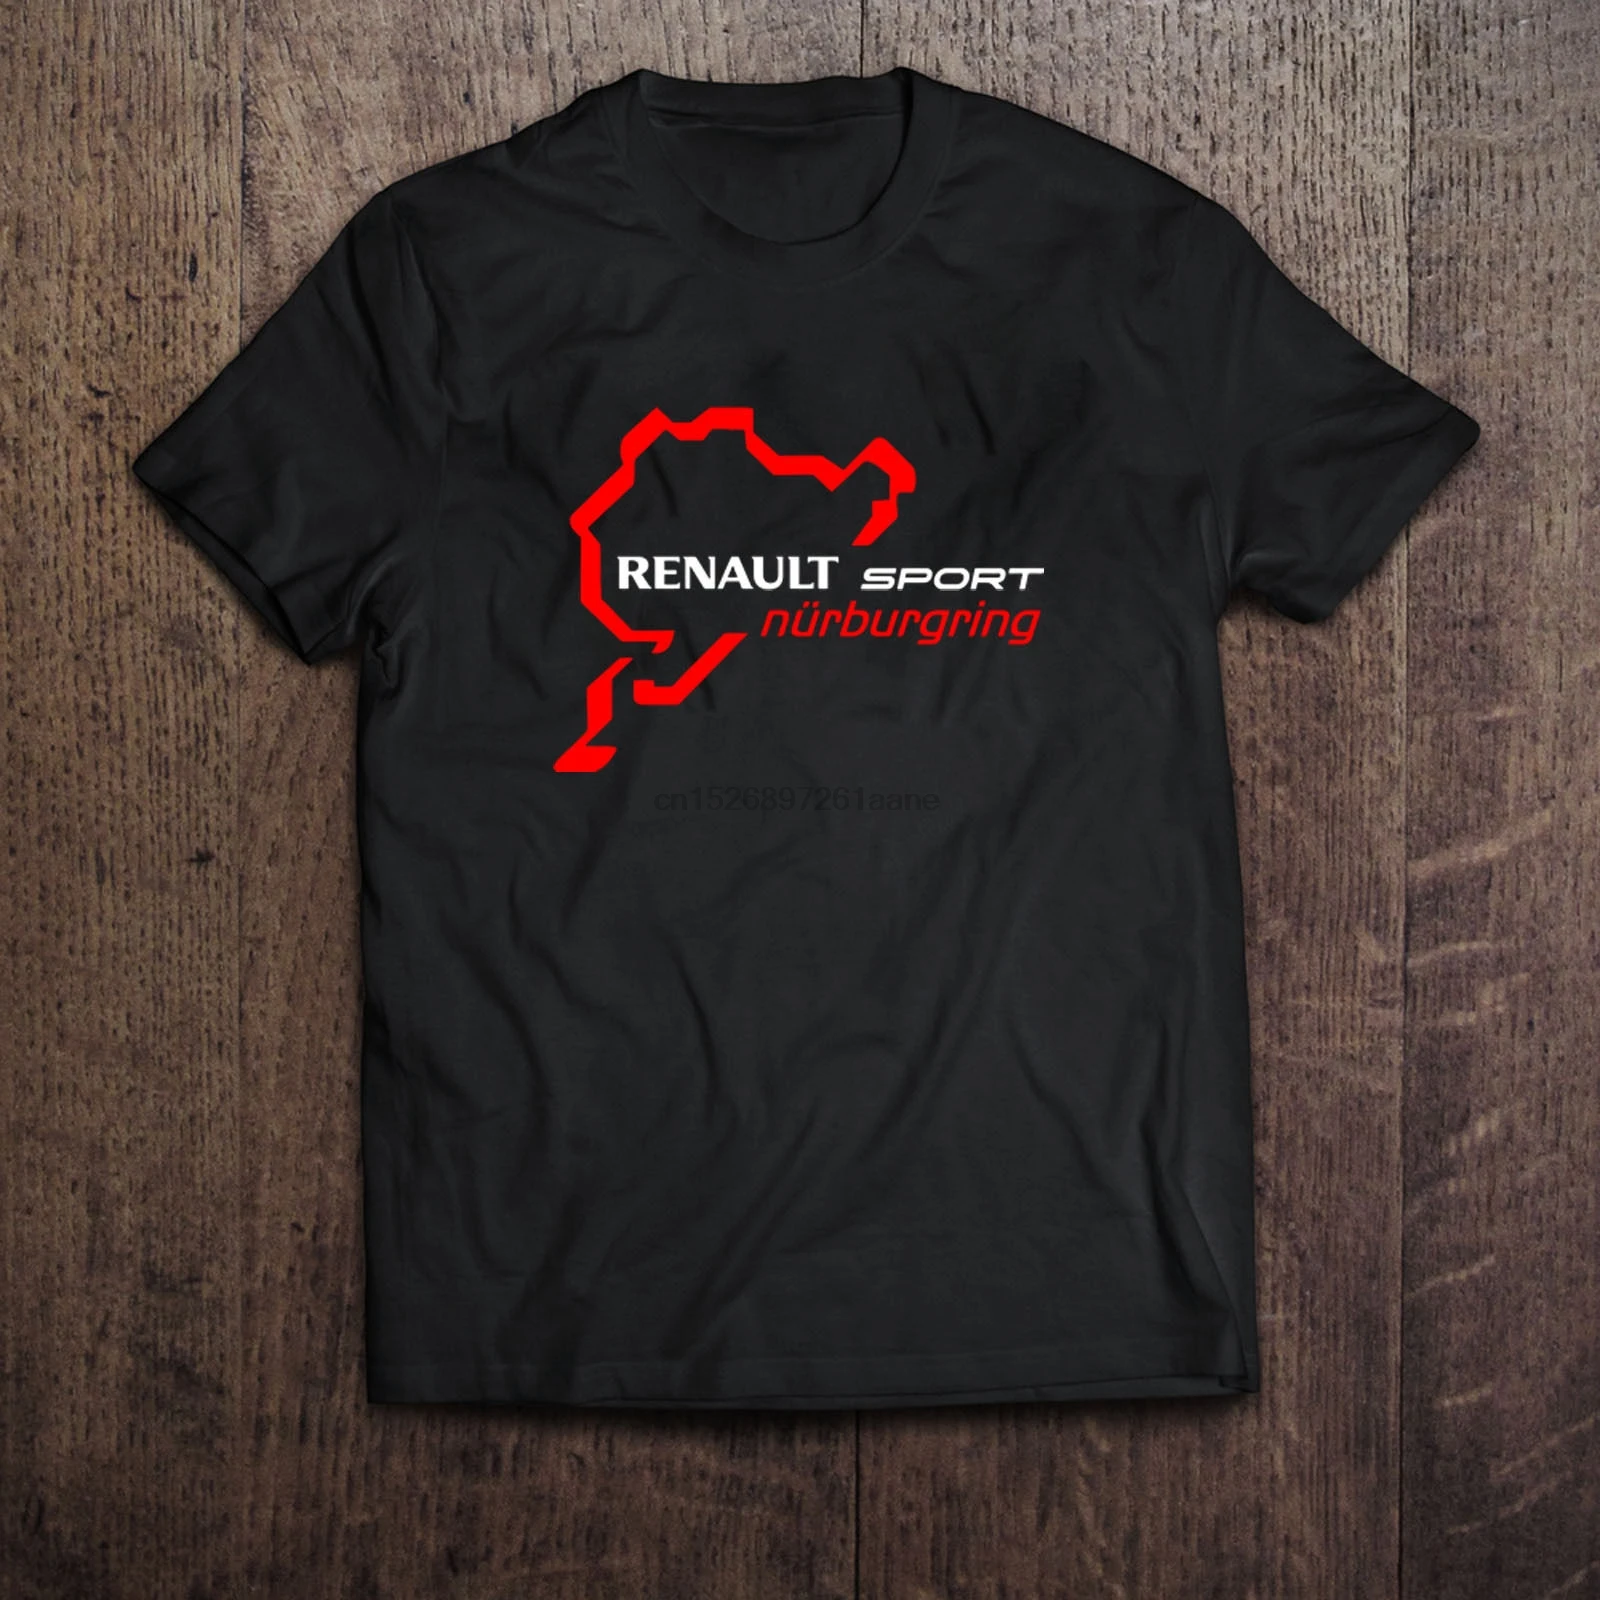 

RENAULT SPORT NURBURGRING Clio R3 Touring Car Racing Black T-Shirt Men S-3XL Cool Casual pride t shirt men Unisex Fashion